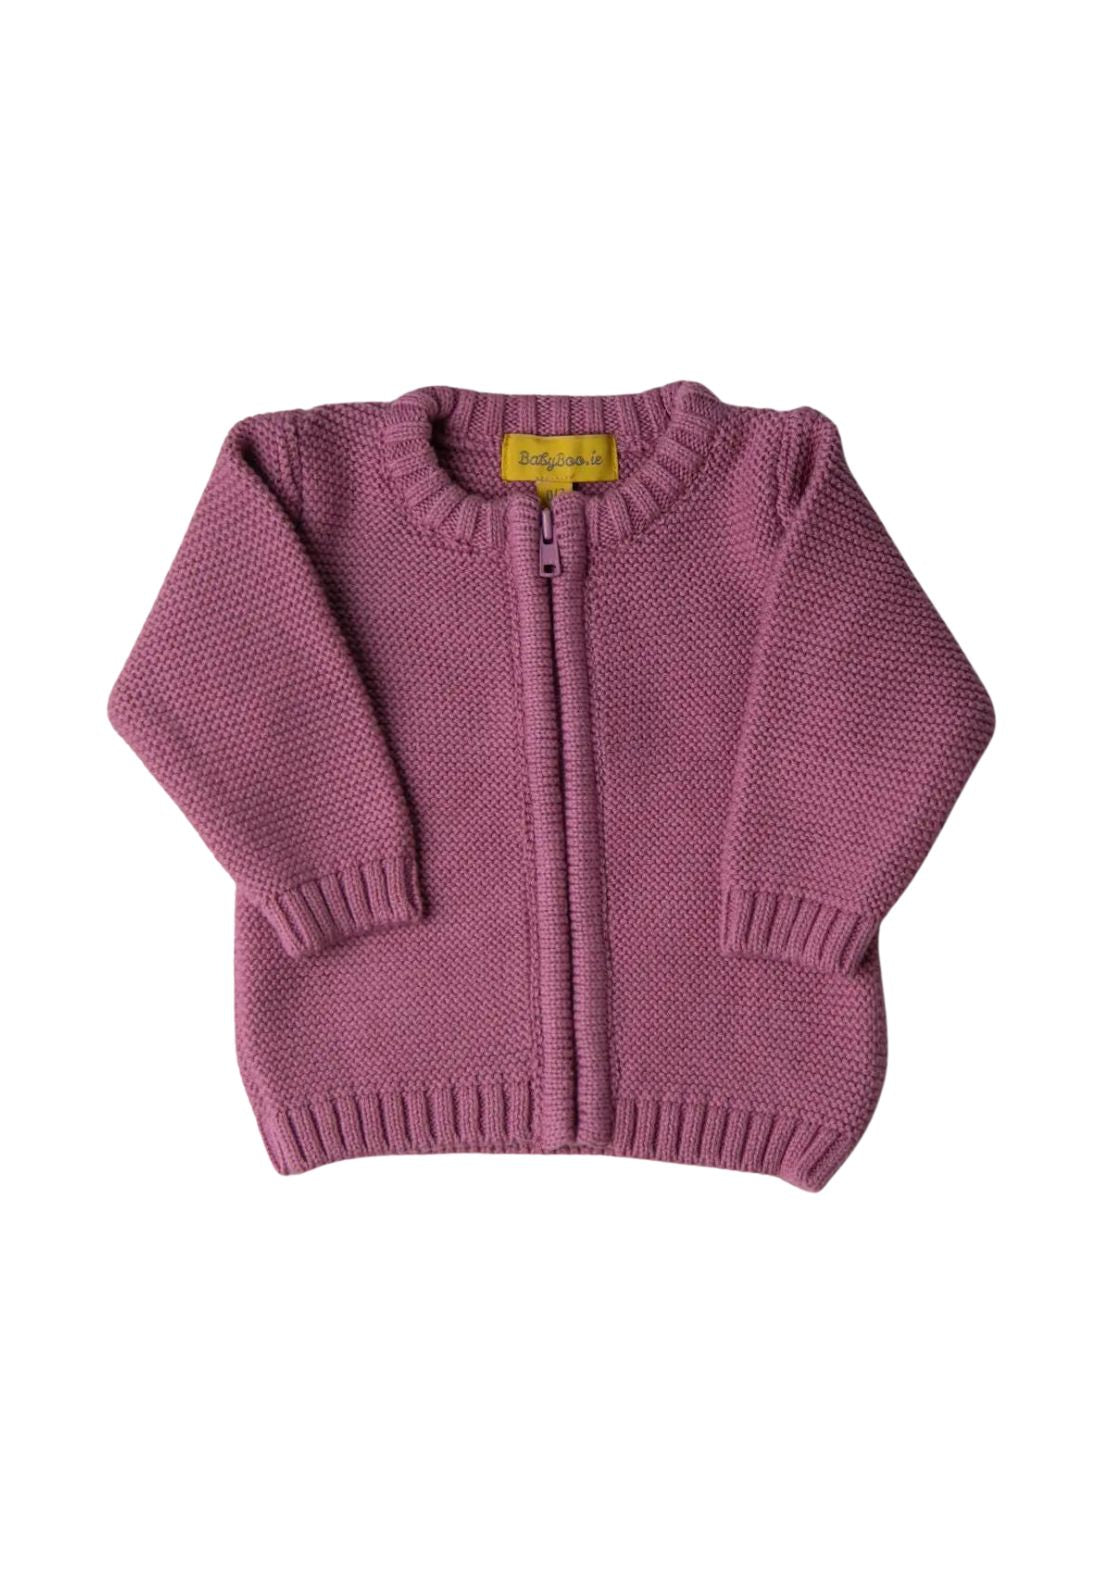 Babyboo Zipped Cardigan - Pink 1 Shaws Department Stores